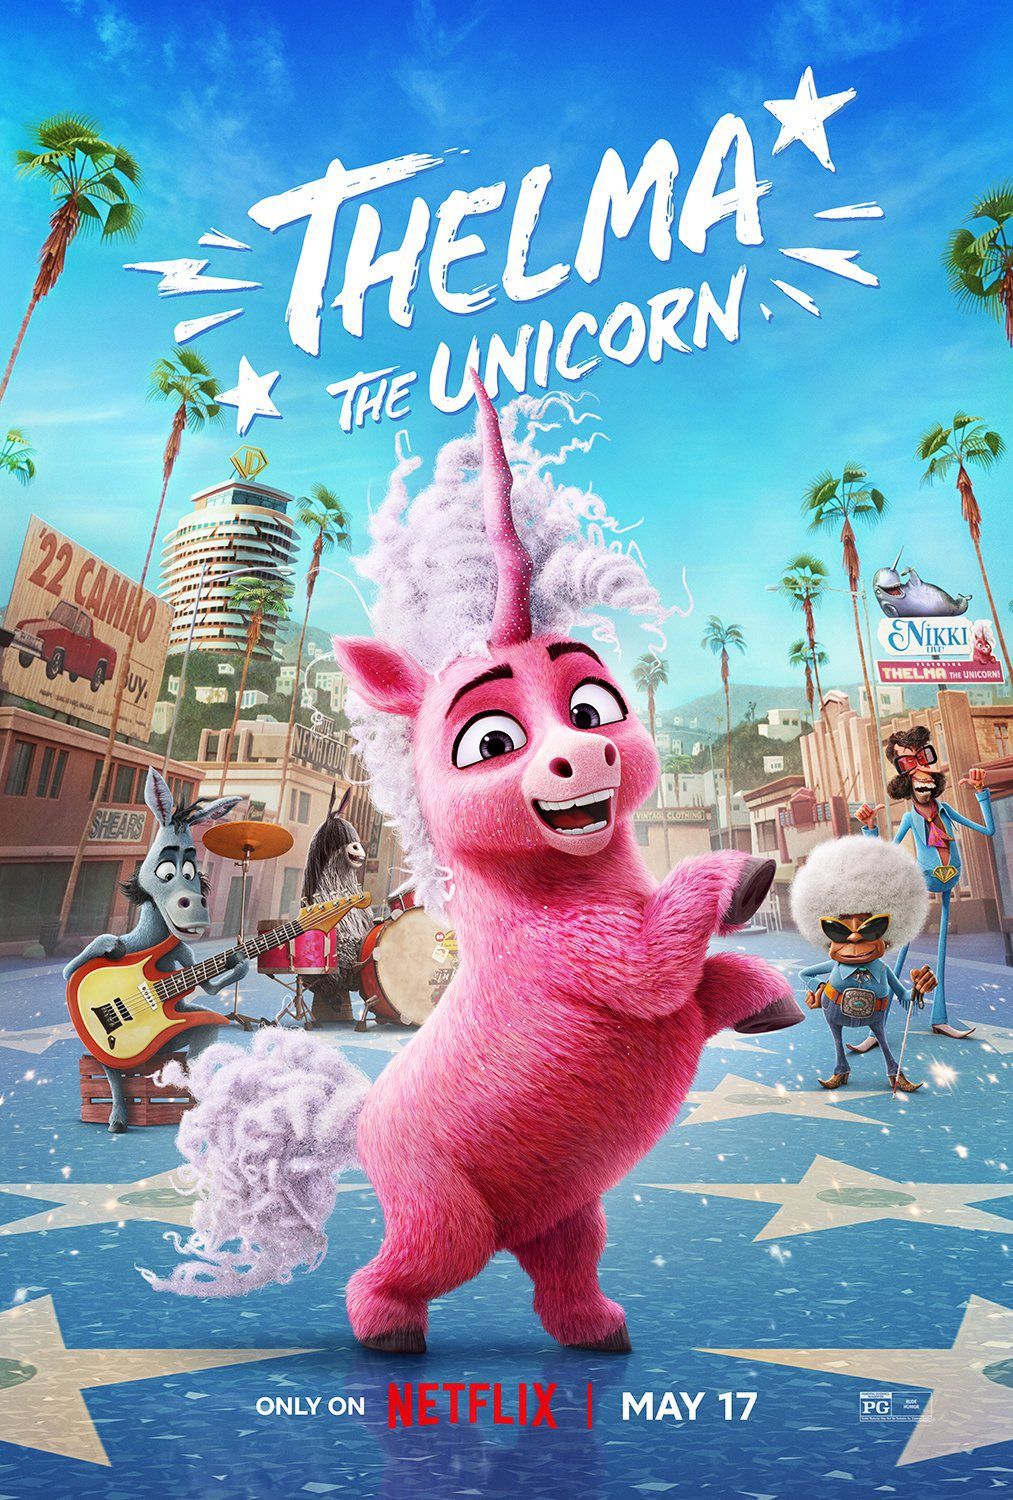 Thelma the Unicorn Netflix Poster